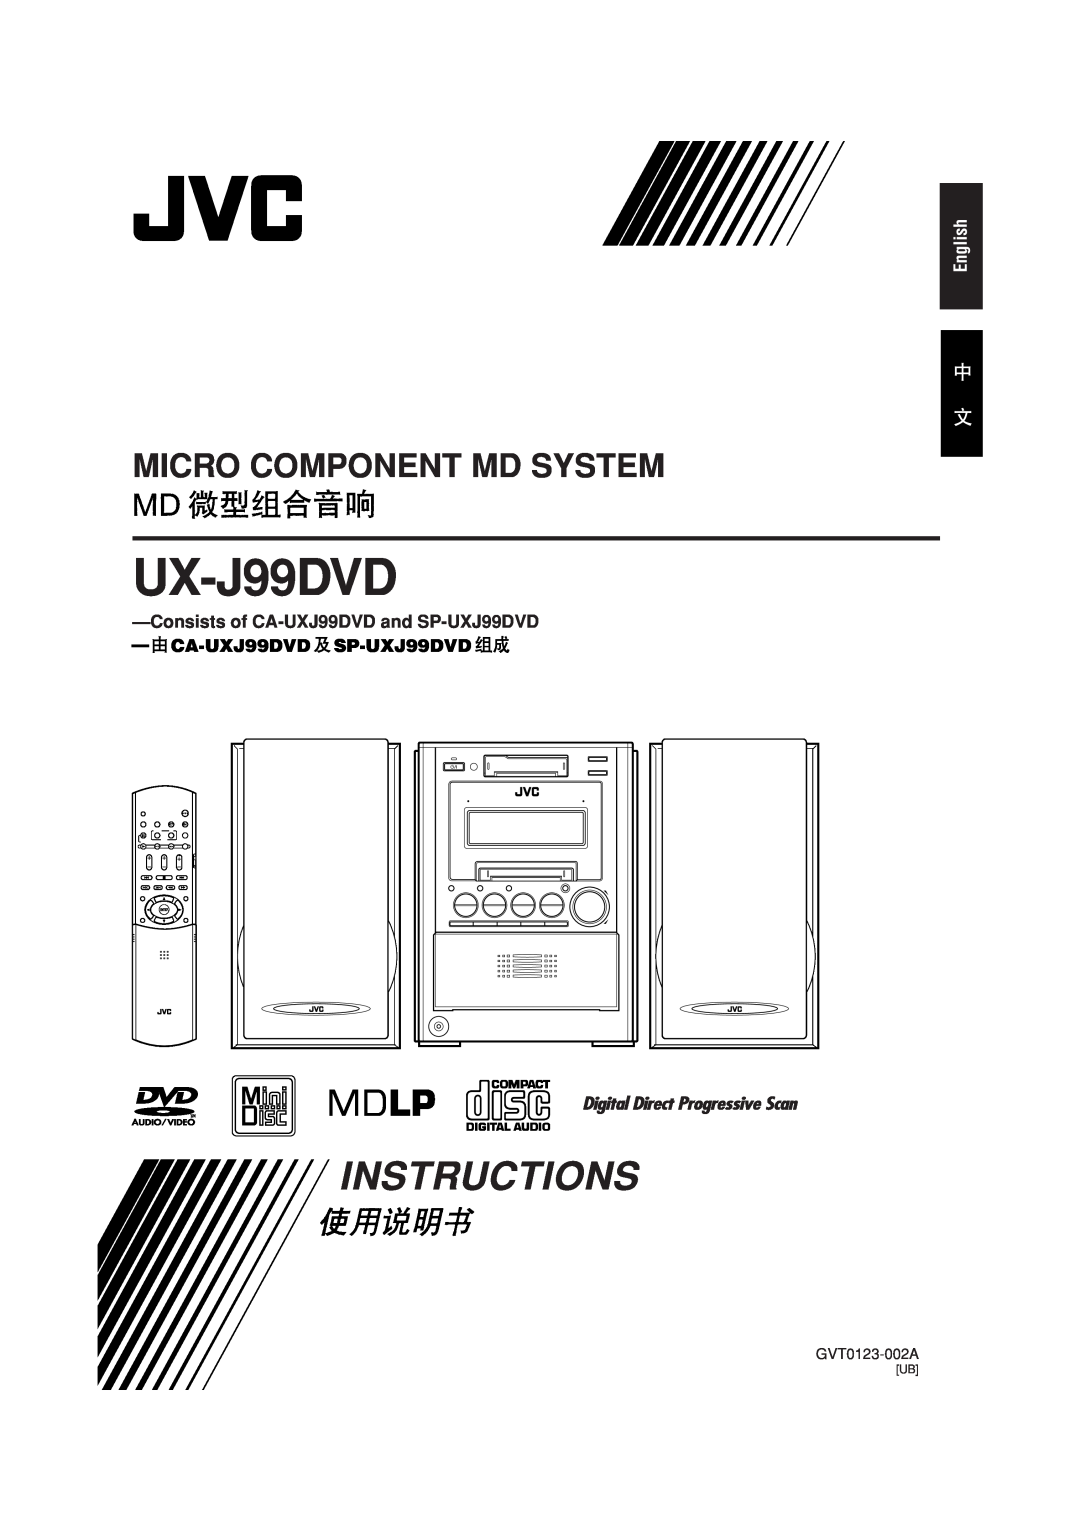 JVC UX-J99DVD manual English, Consistsof CA-UXJ99DVDand SP-UXJ99DVD, CA-UXJ99DVDSP-UXJ99DVD, Instructions, GVT0123-002A 